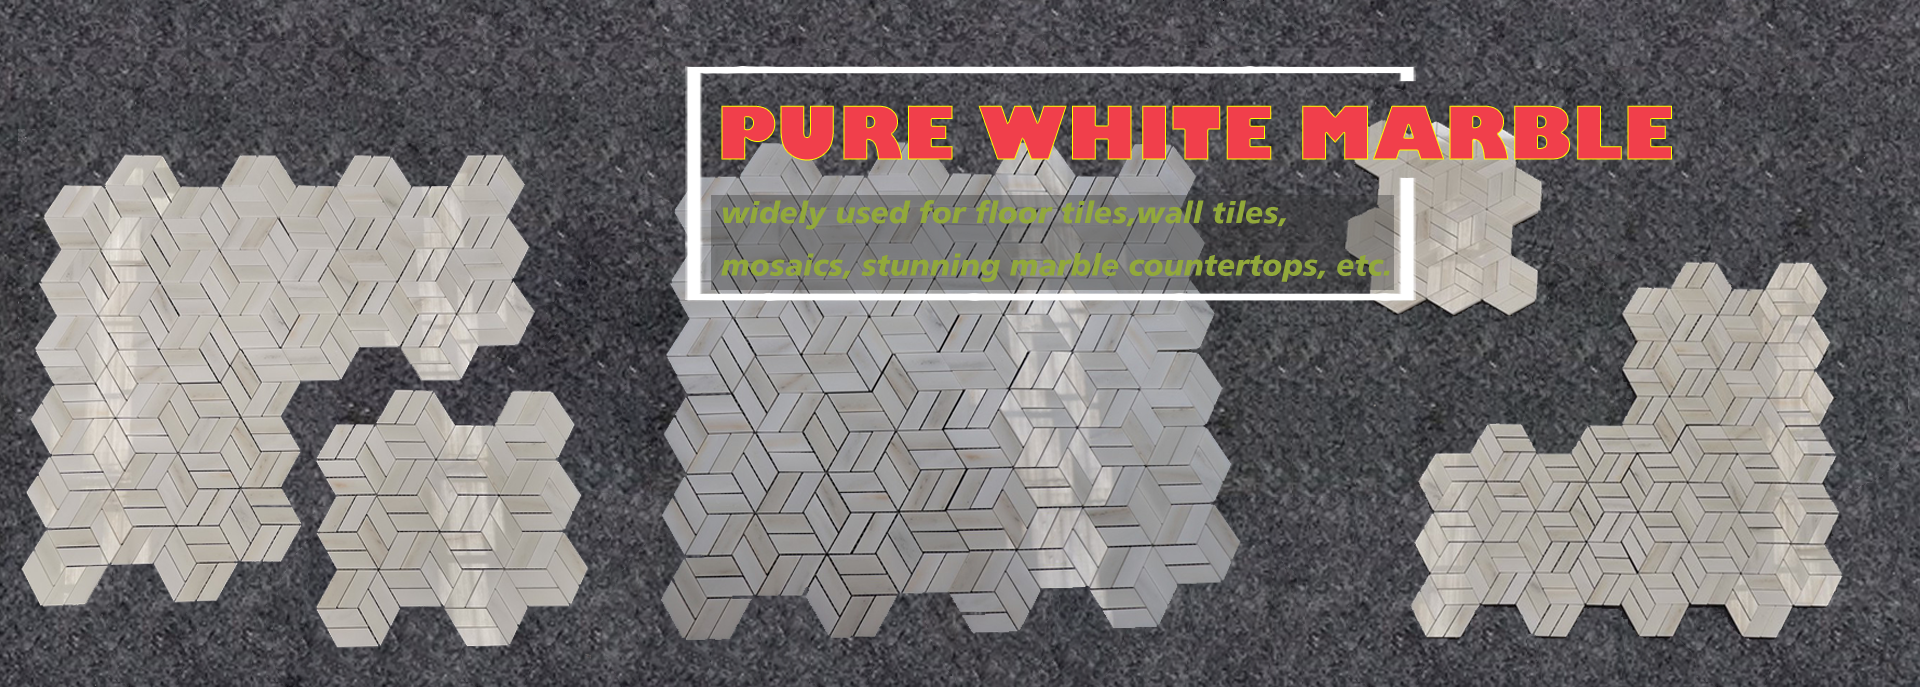 Pure White Marble Flooring Tiles/Slabs/Countertops Price